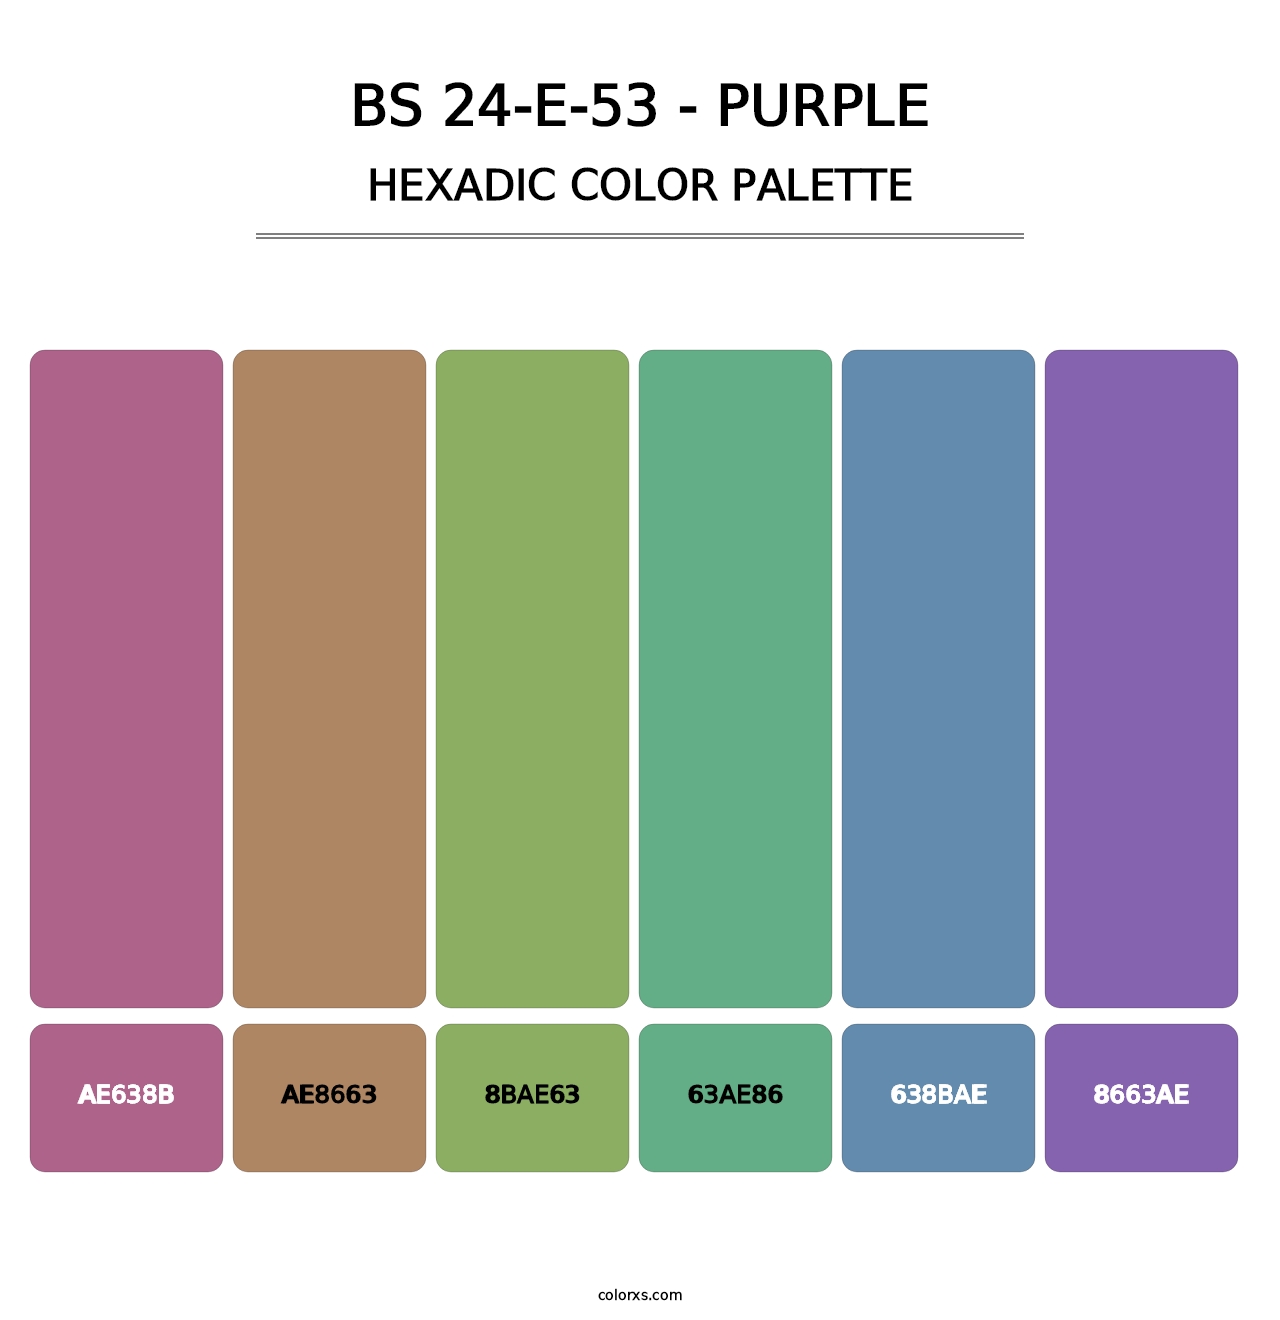 BS 24-E-53 - Purple - Hexadic Color Palette